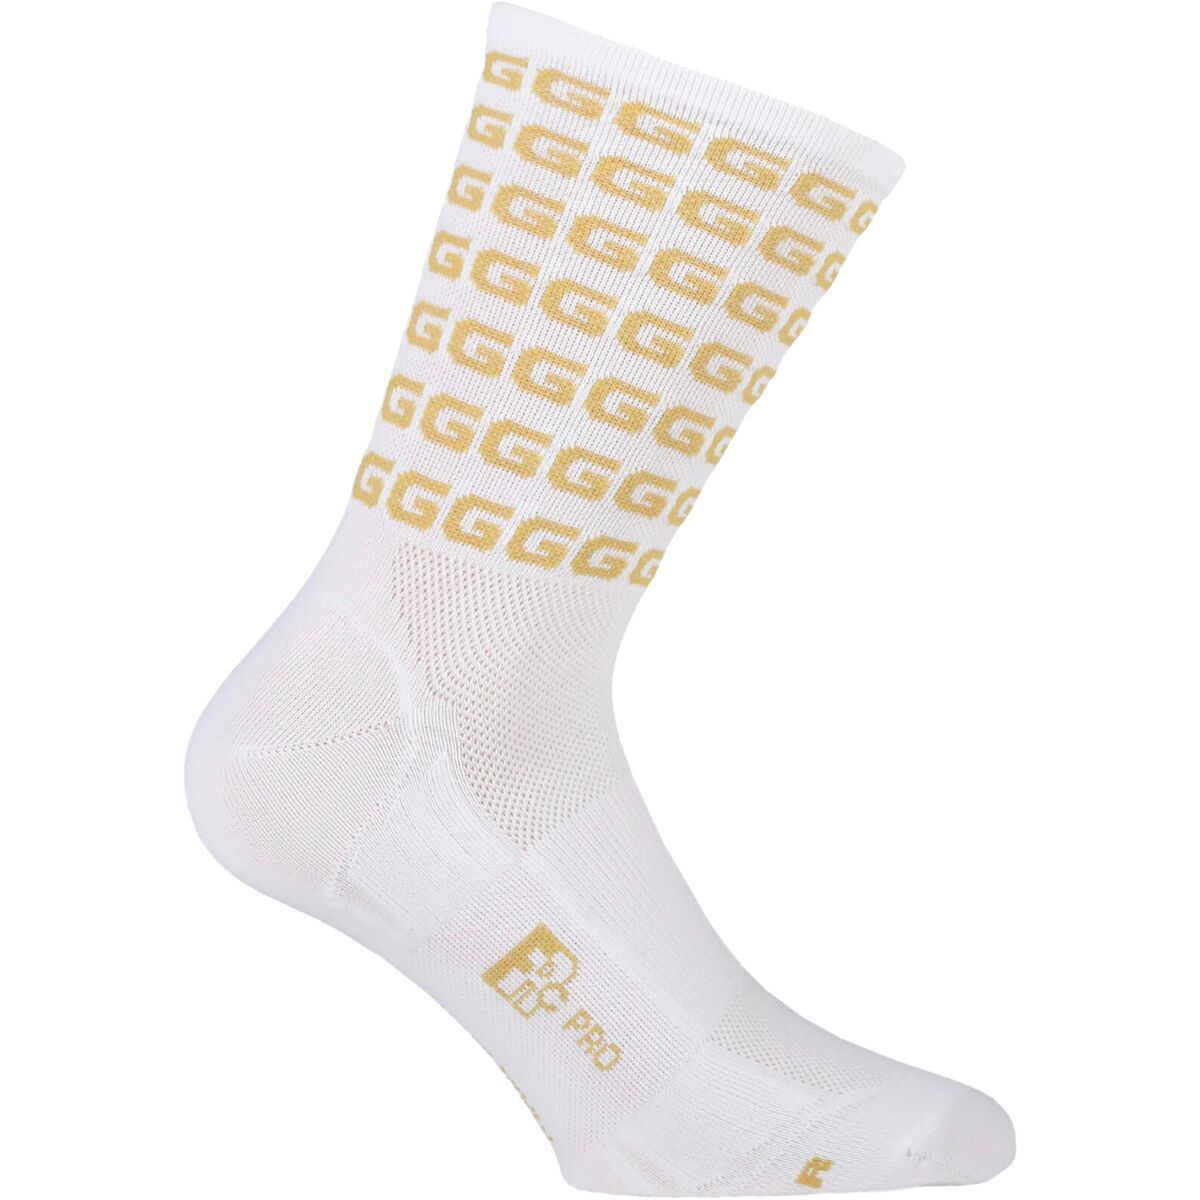 Giordana FR-C Pro G Tall Cuff Sock